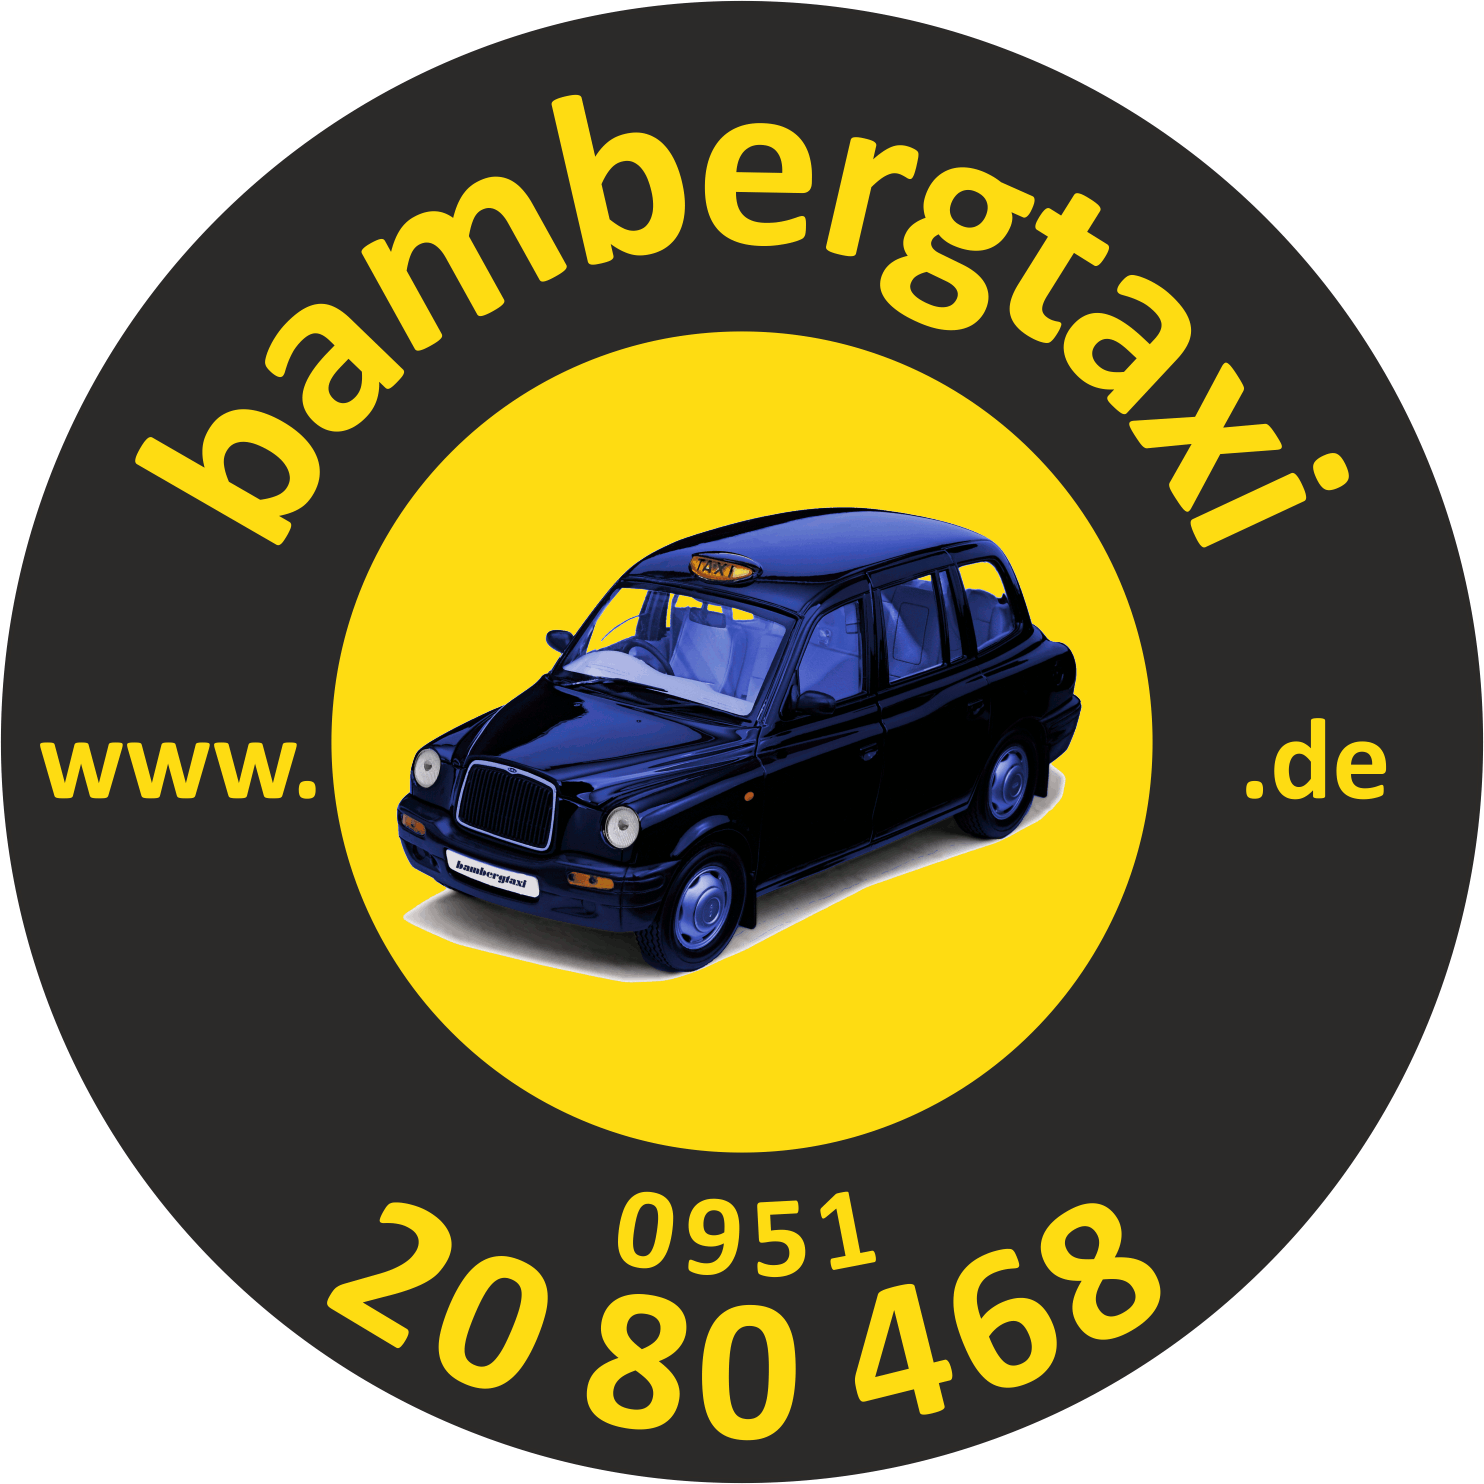 Taxi Bamberg impressum english